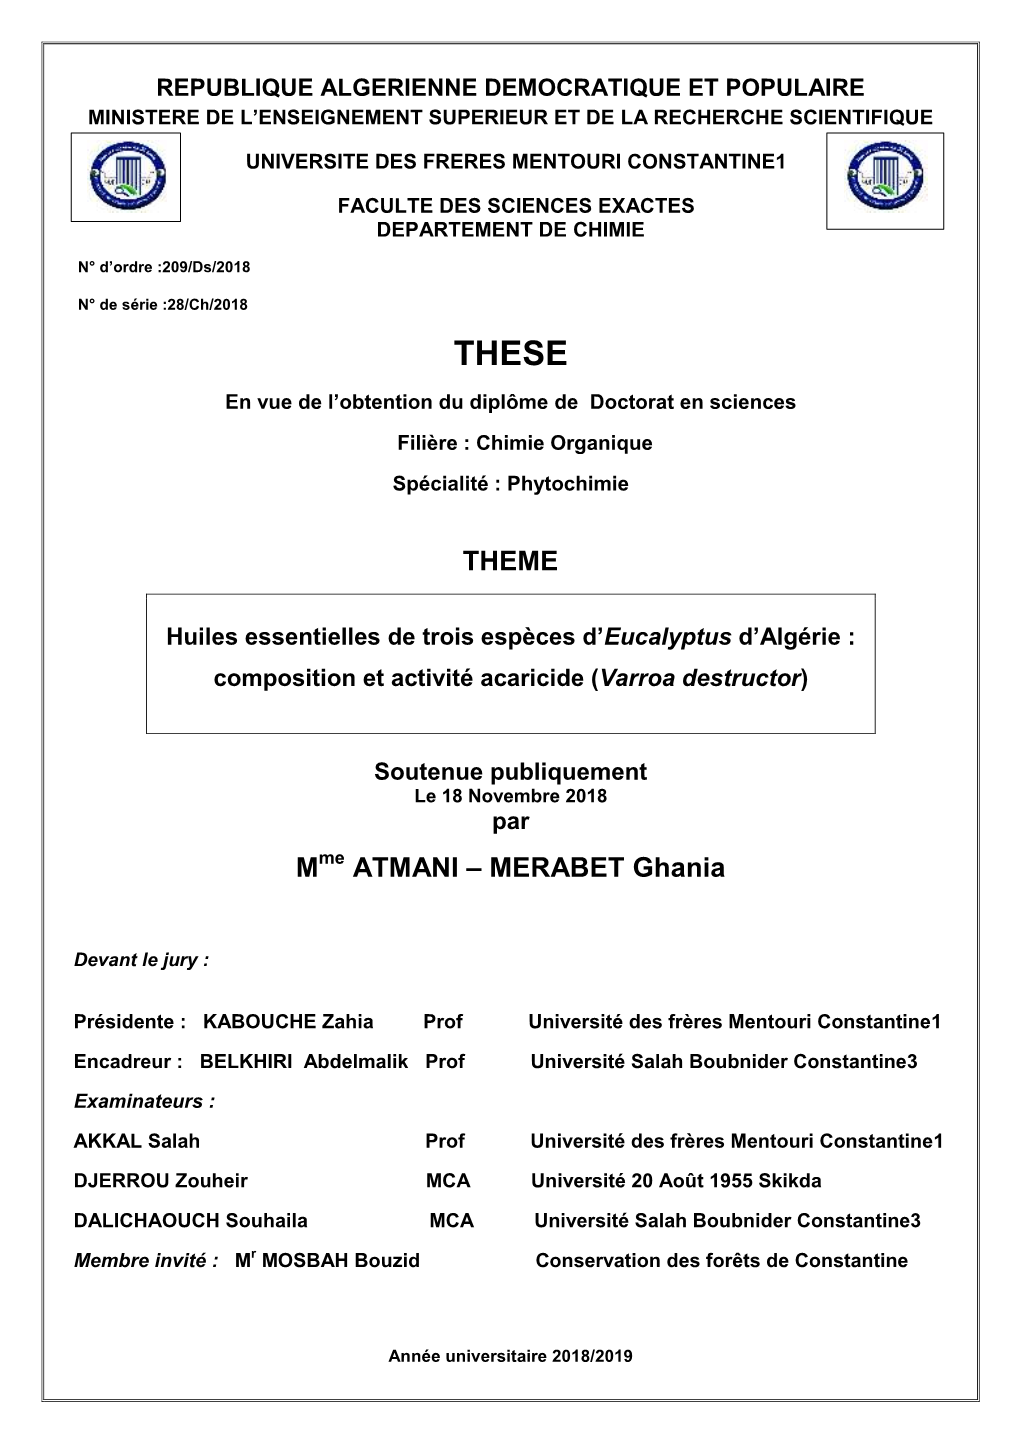 THEME M ATMANI – MERABET Ghania